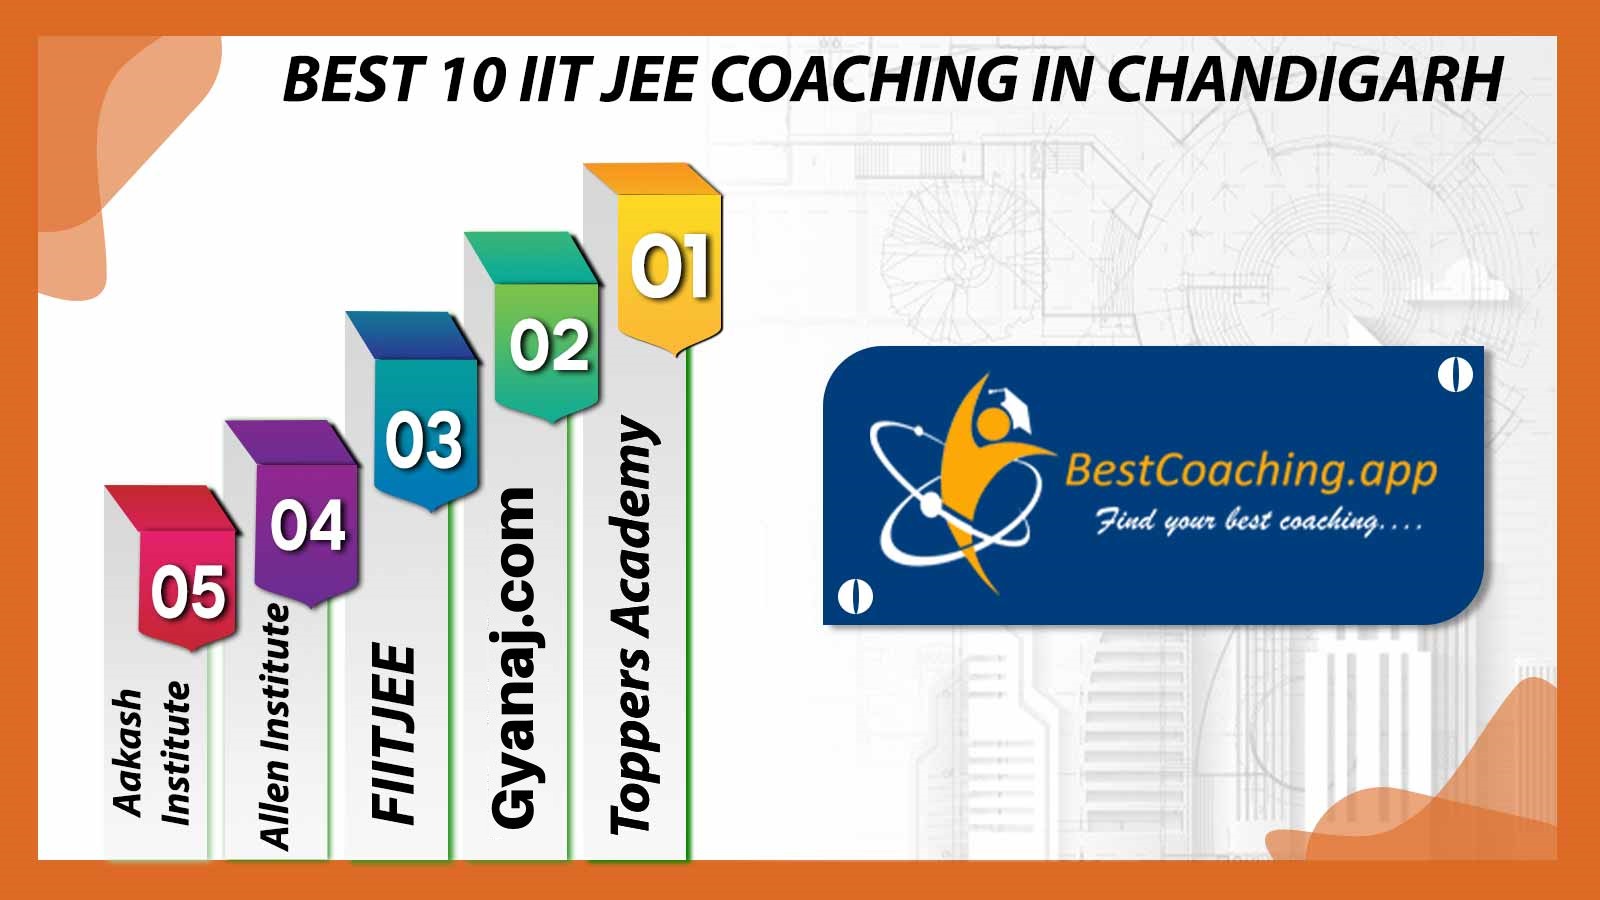 Top IIT JEE Coaching In Chandigarh